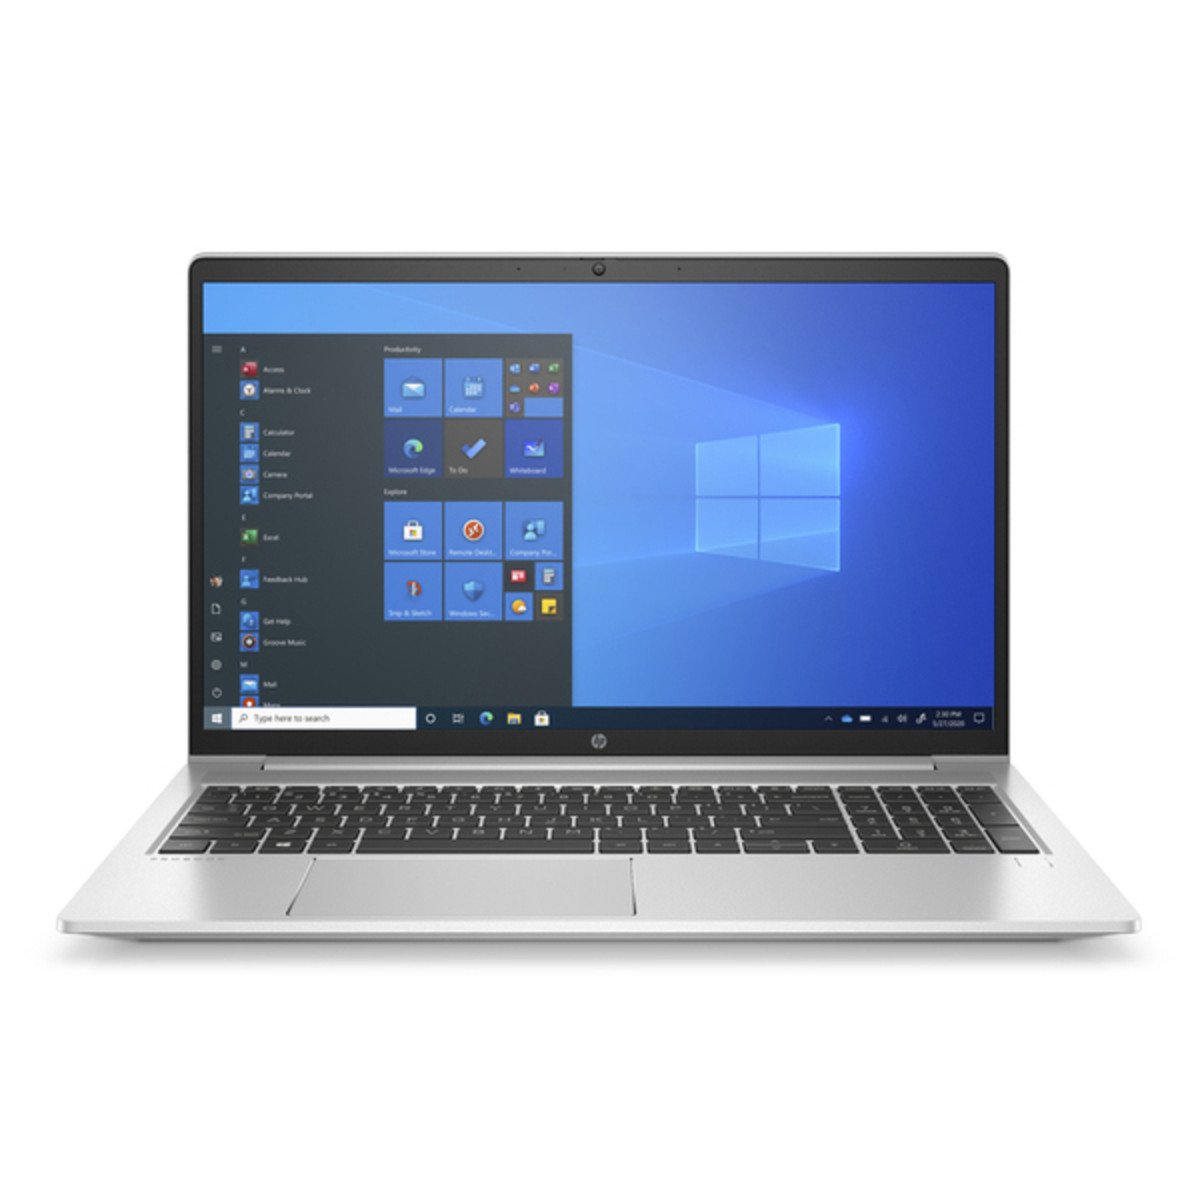 HP ProBook 450 G8 15.6 Inch i7-1165G7 2.8GHz 16GB RAM 512GB SSD Laptop with Windows 10 Pro + FREE Accessories Bundle!